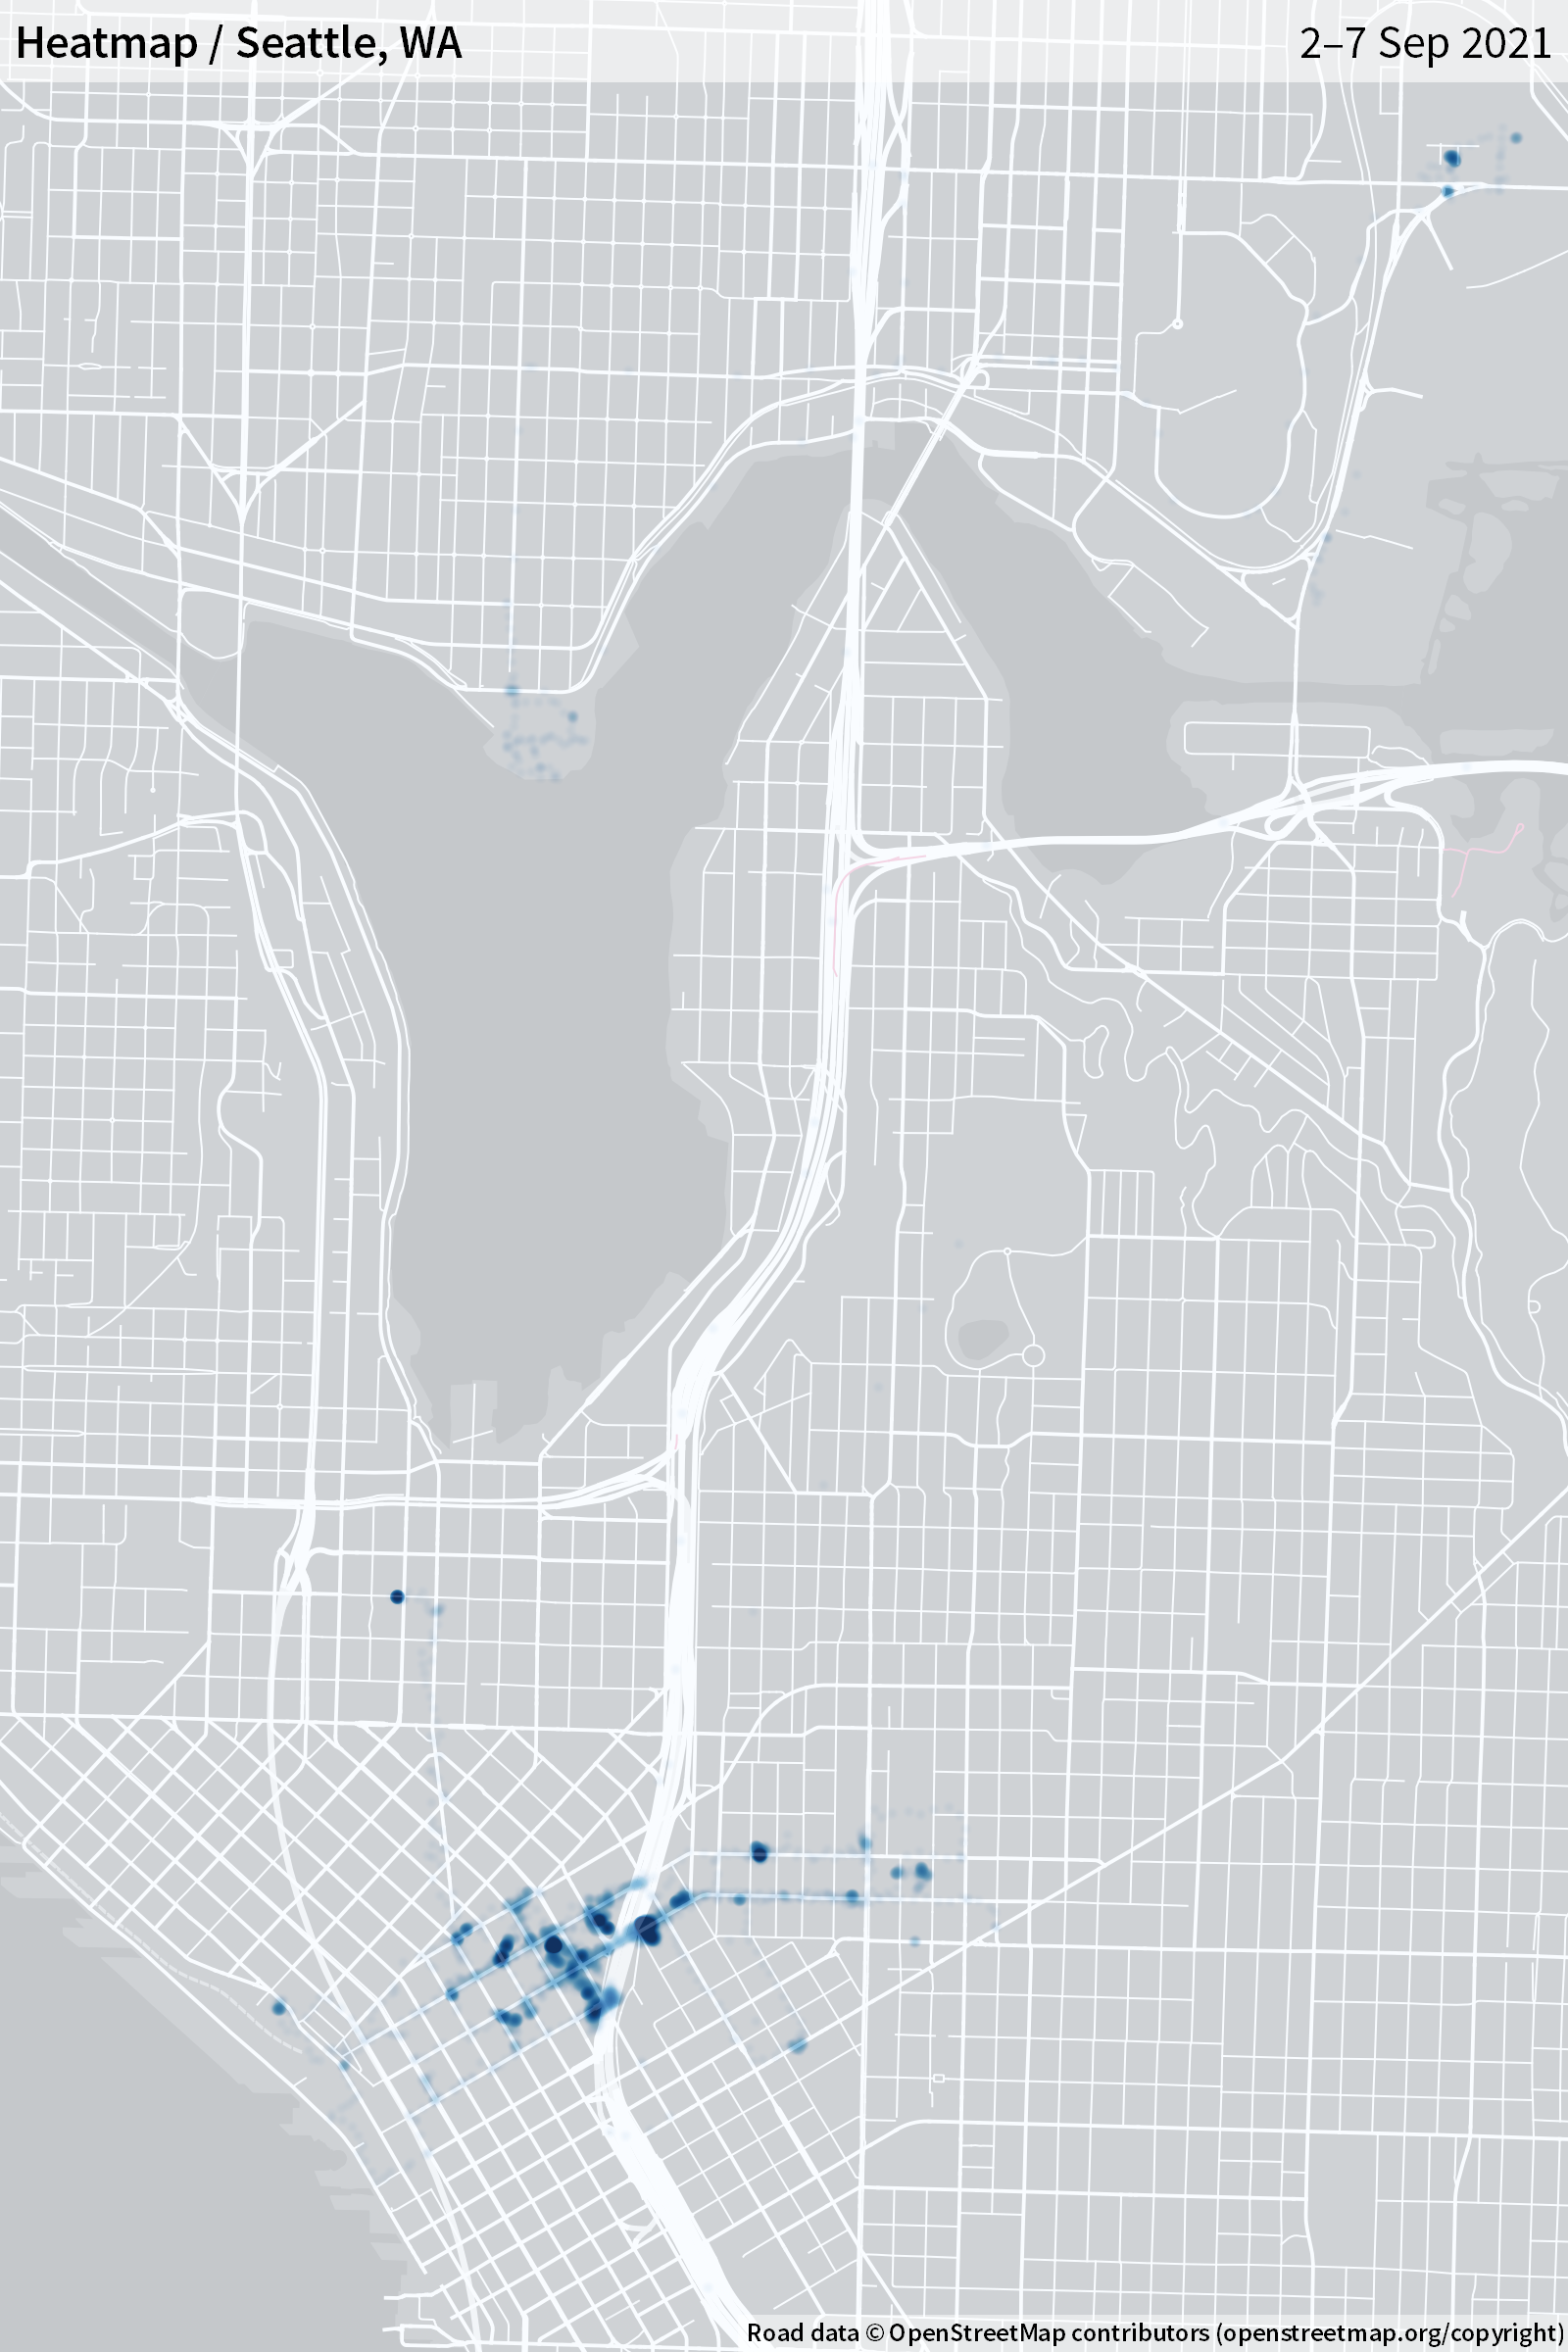 Heatmap of Seattle, Washington from 2-7 September 2021.